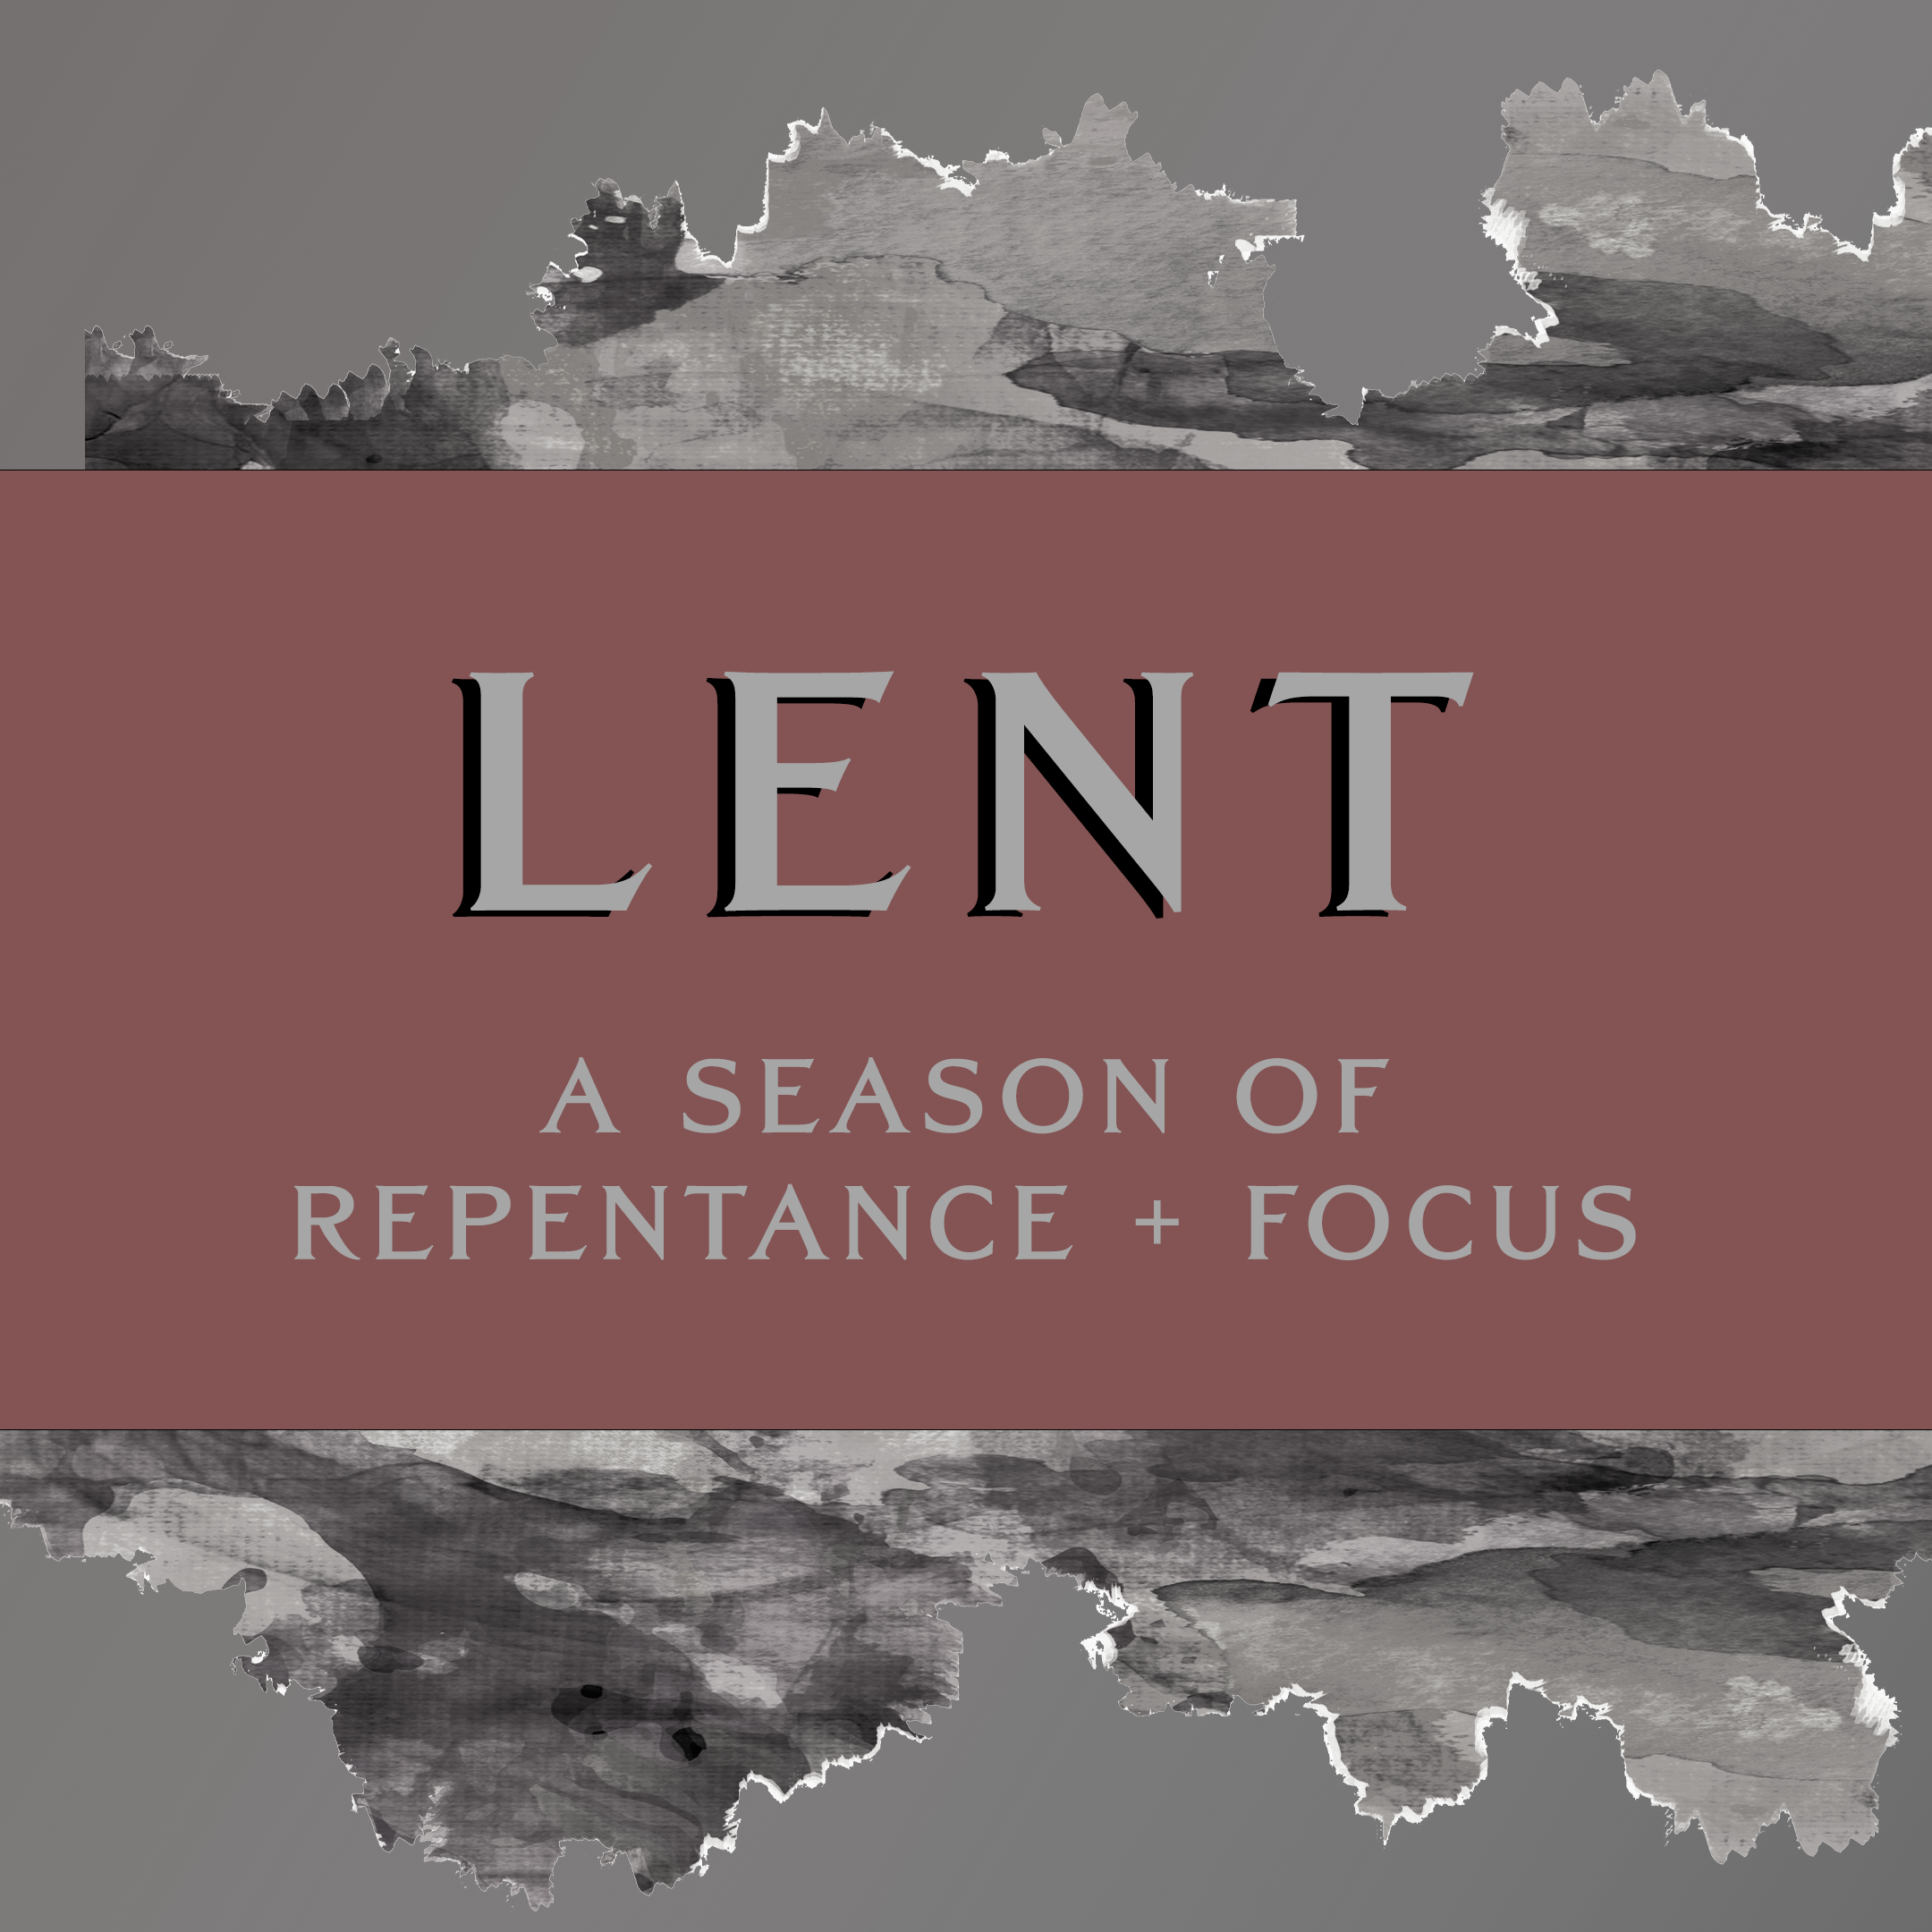 Lent: A season of repentance + focus